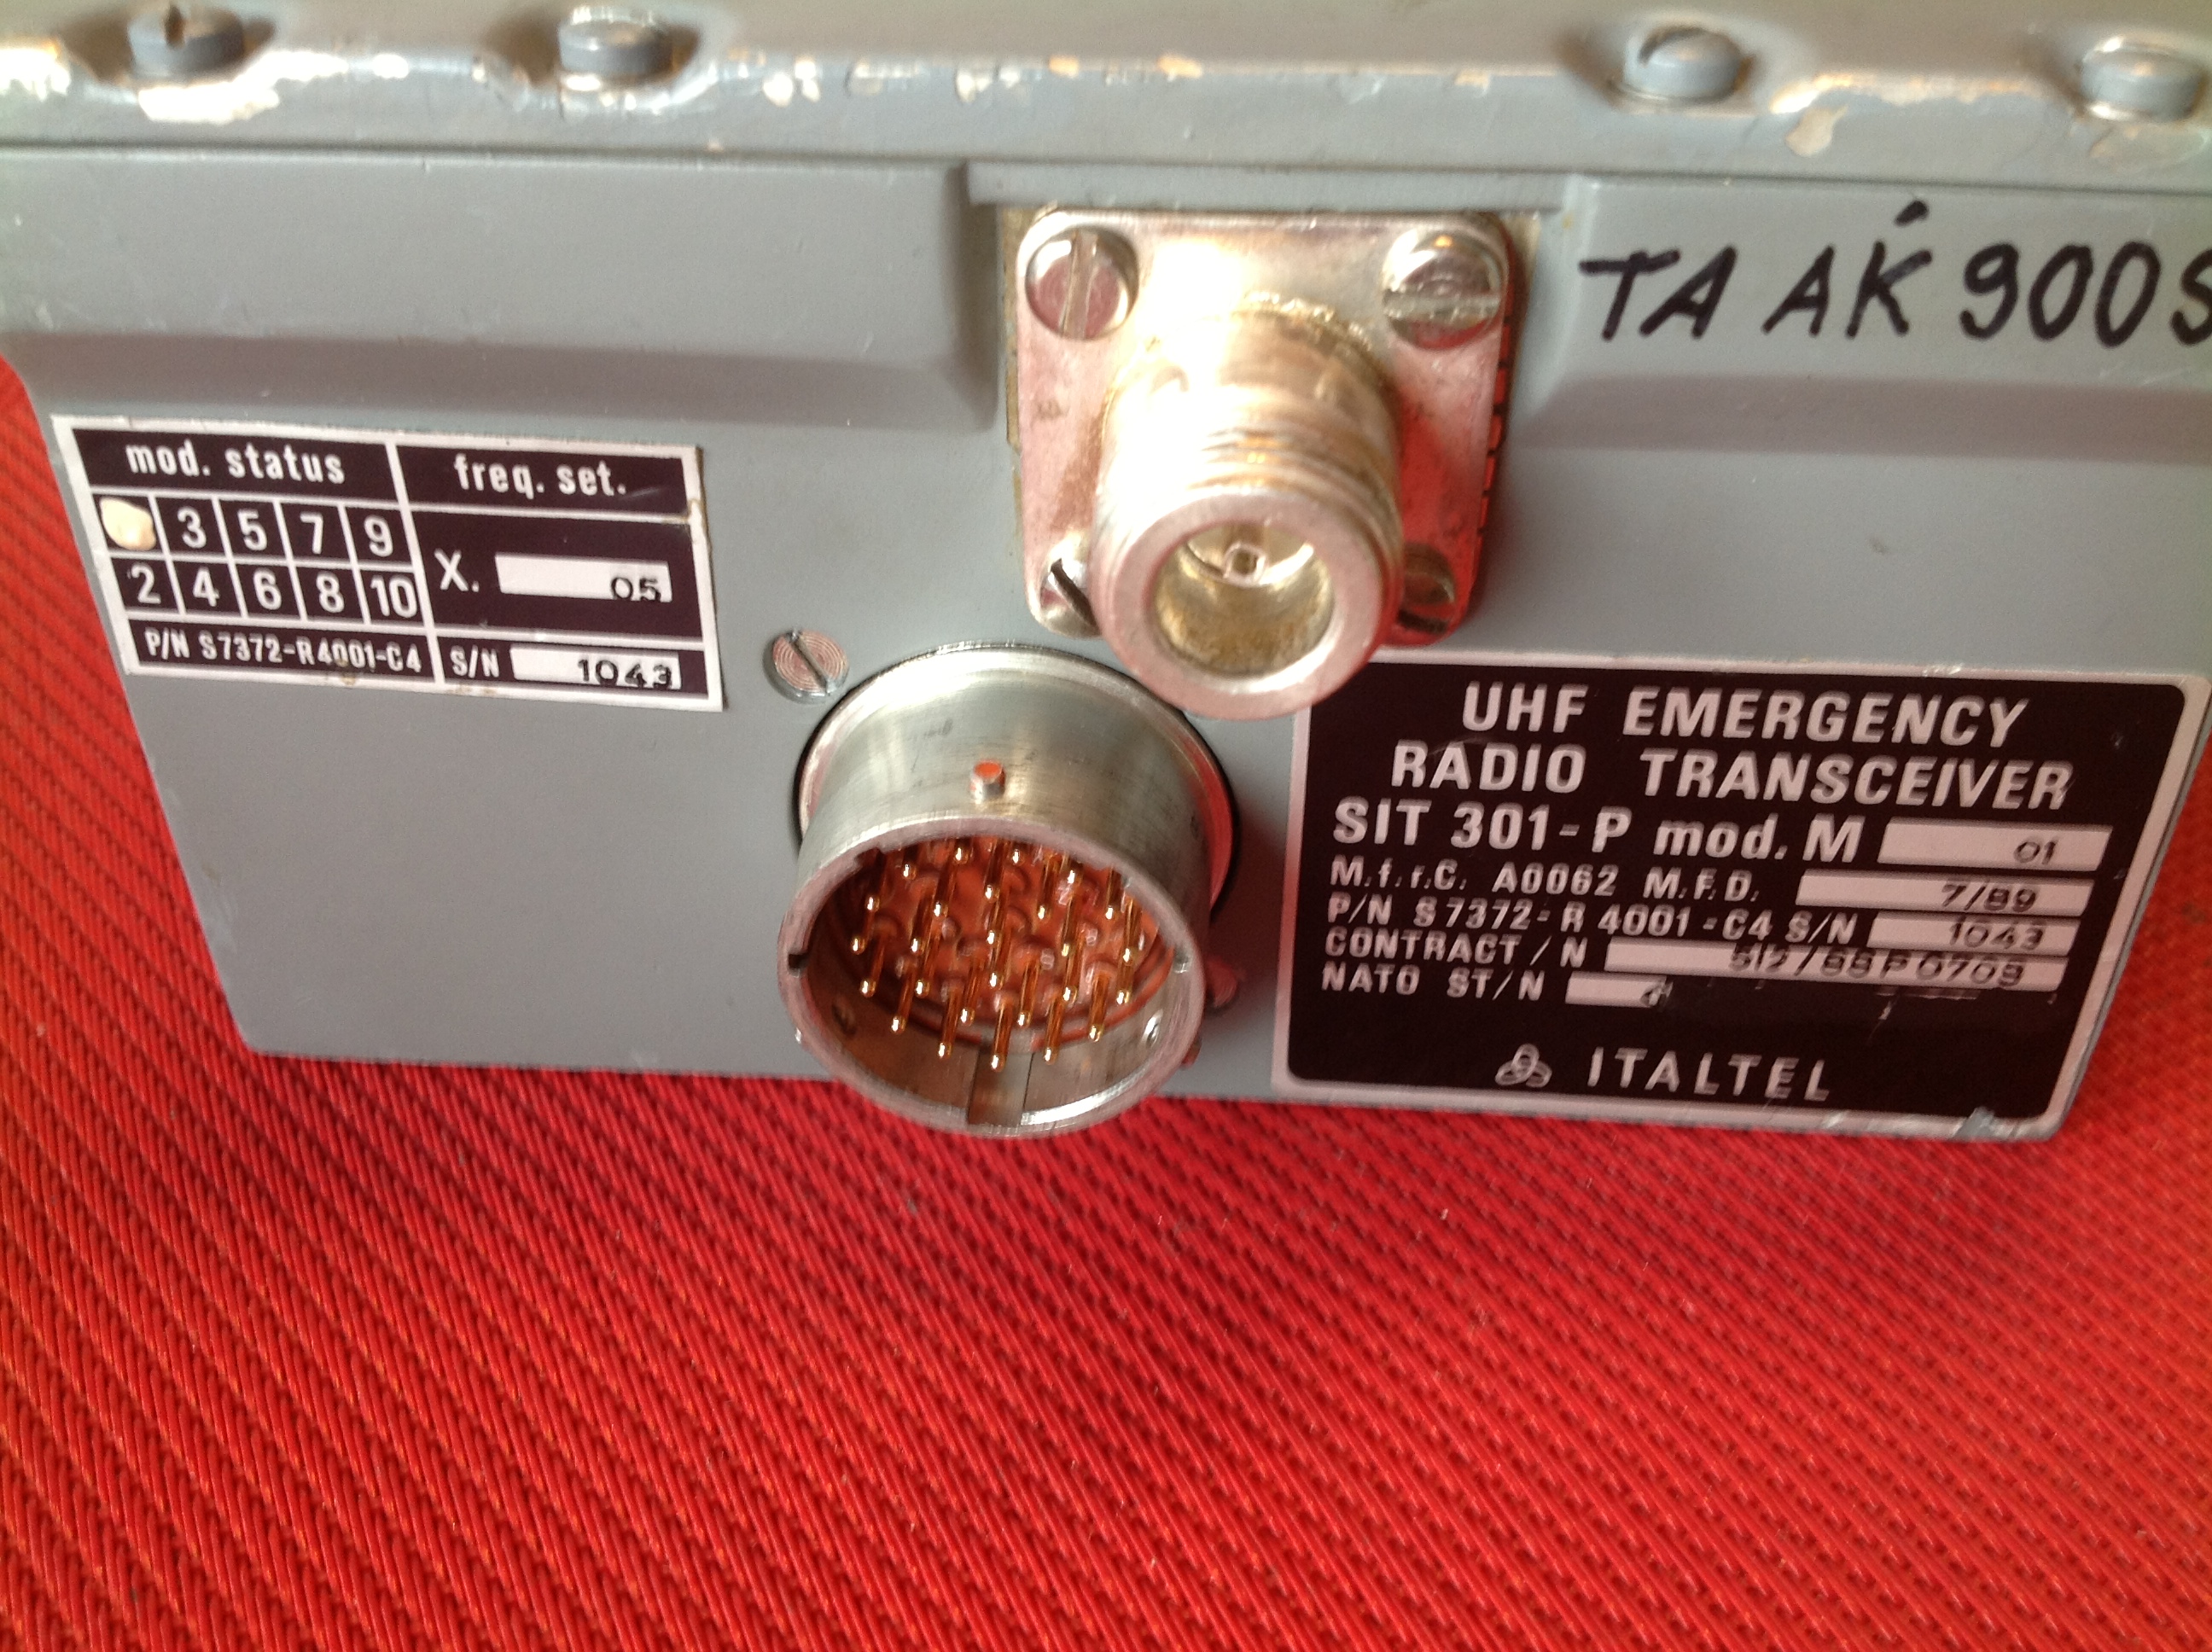 UHF Emergency Radio Transceiver, UHF-Notfunkgerät Mod. SIT 301-P vom Kampffugzeug Tornado PA 200 Vers.Nr. 5895-12-062-0355